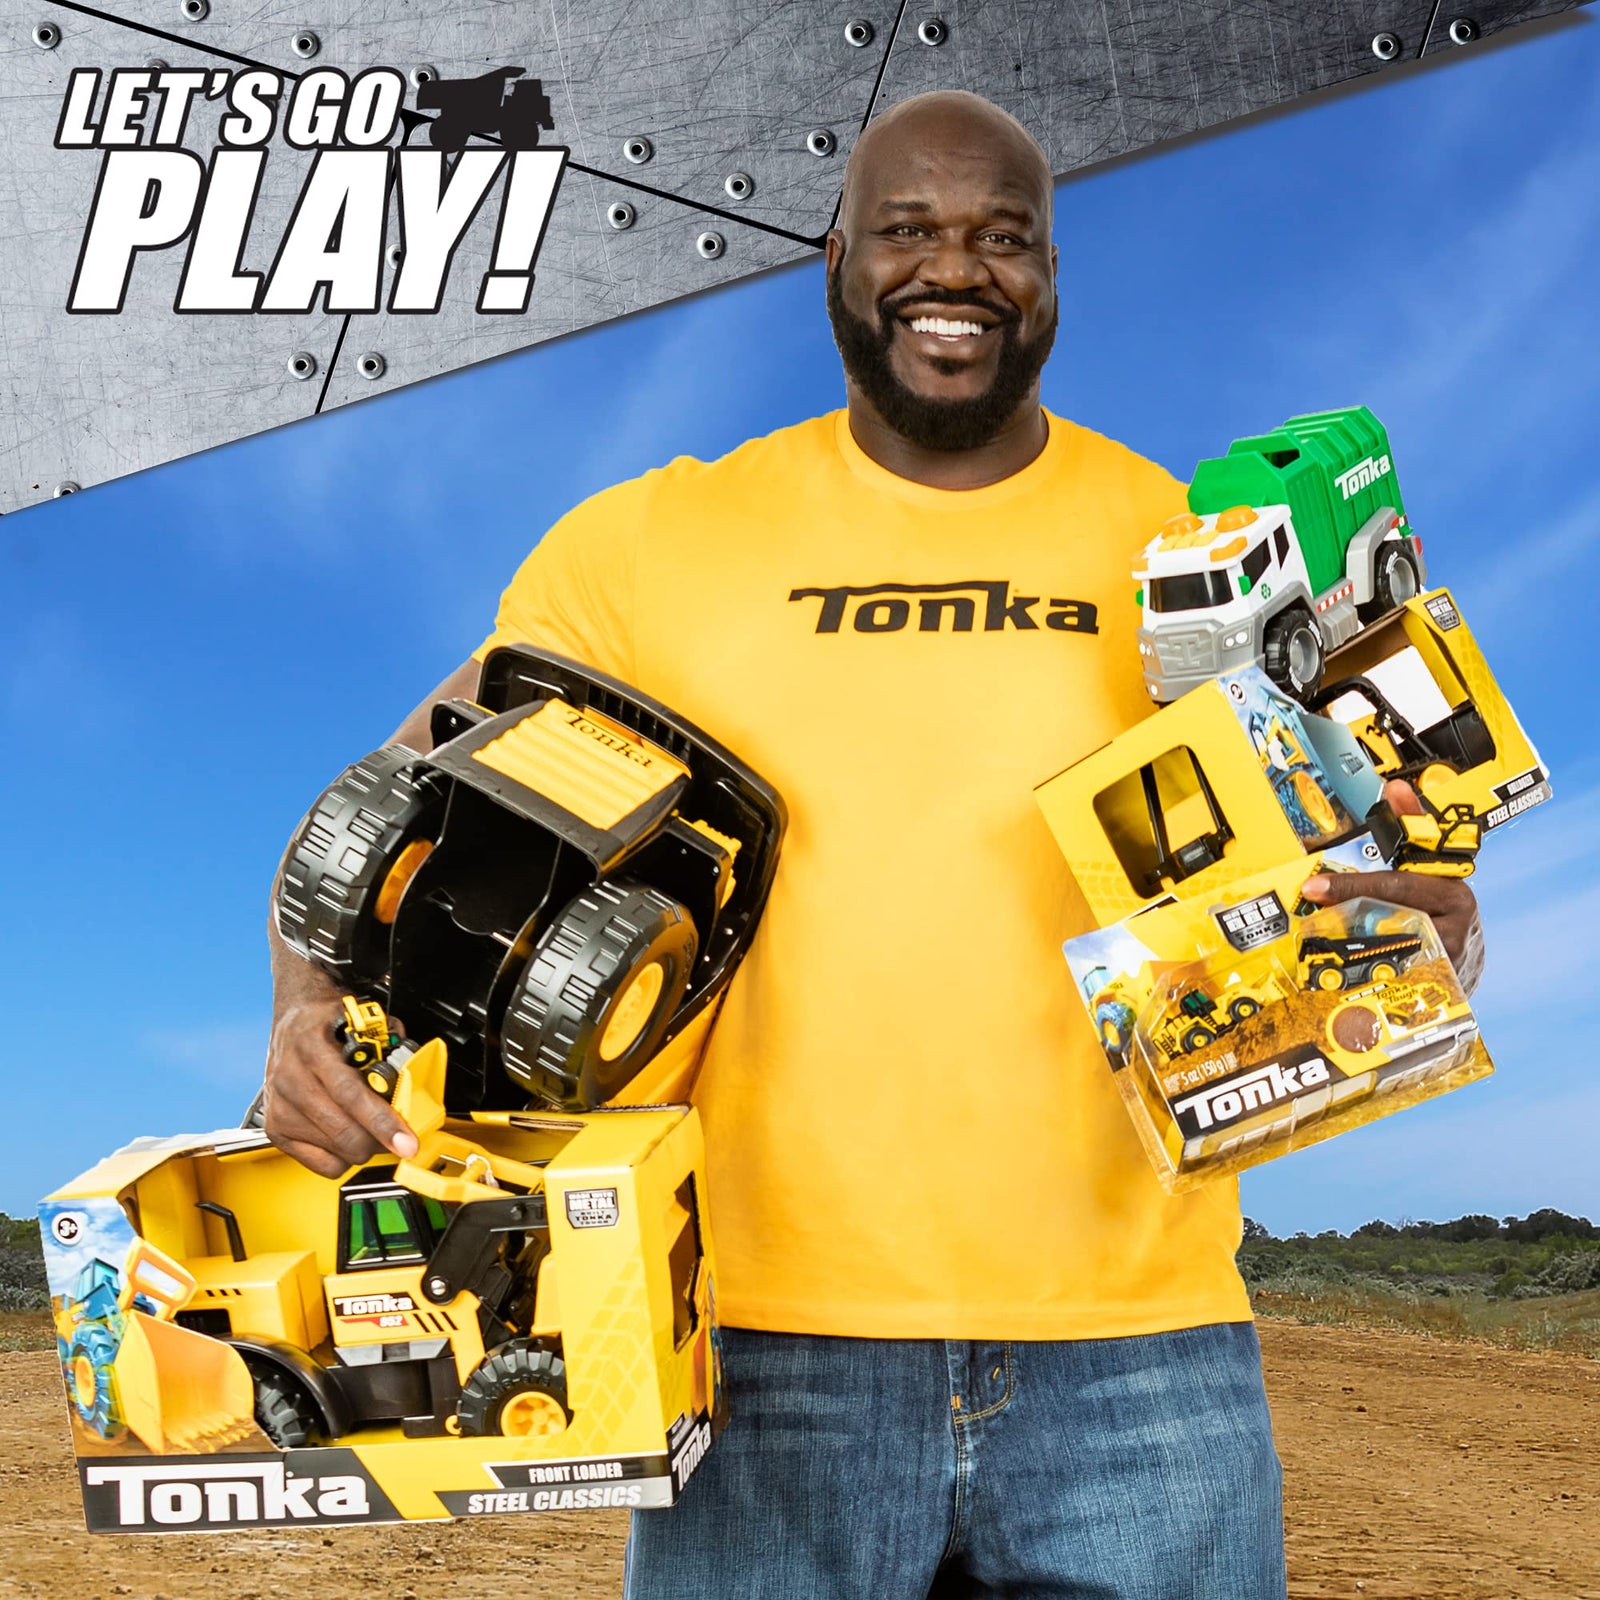 Tonka - Steel Classics Road Grader - Amazon Exclusive - Frustration Free Packaging